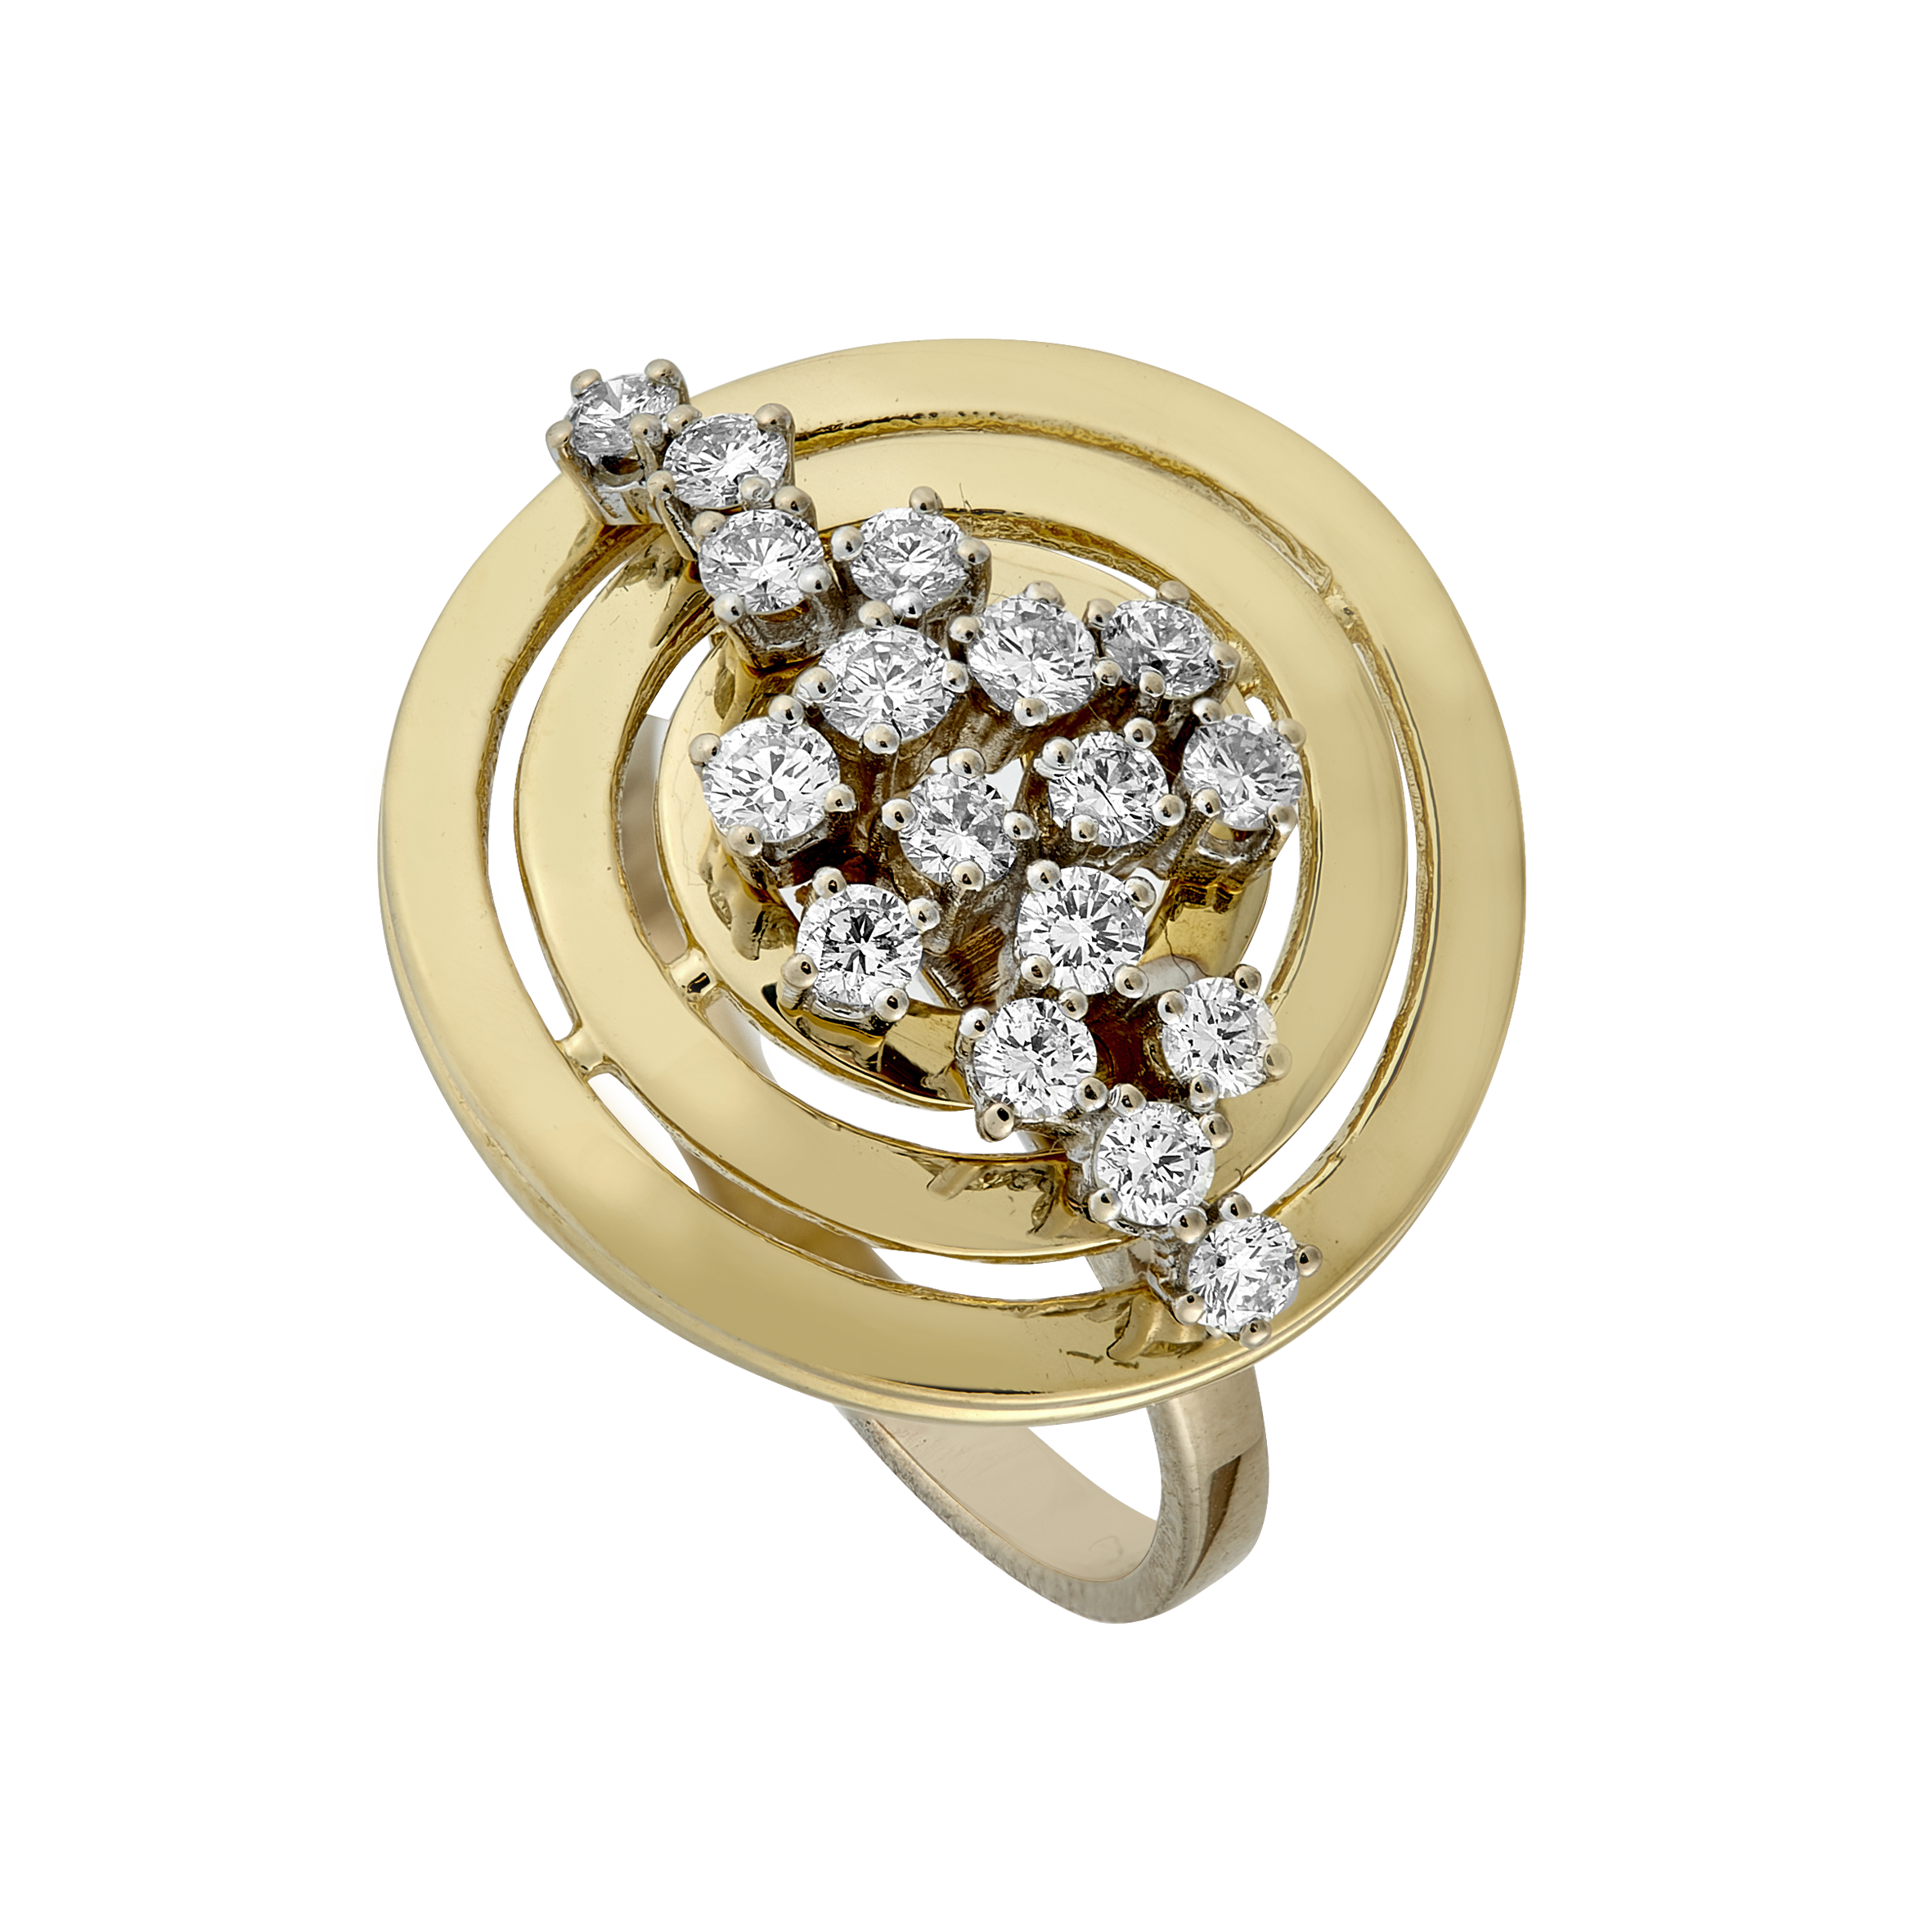 Bague spirale diamants vers 1970 Gerphagnon